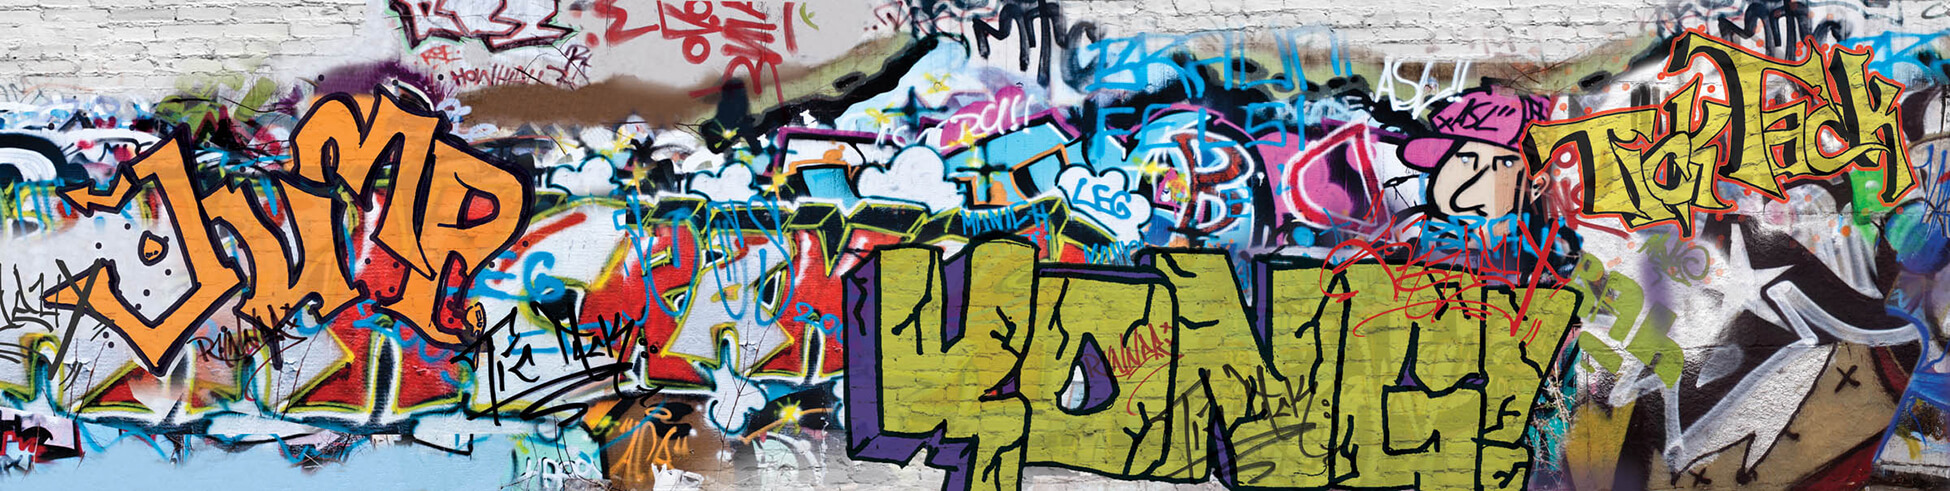 Design-Graffitti-Wall